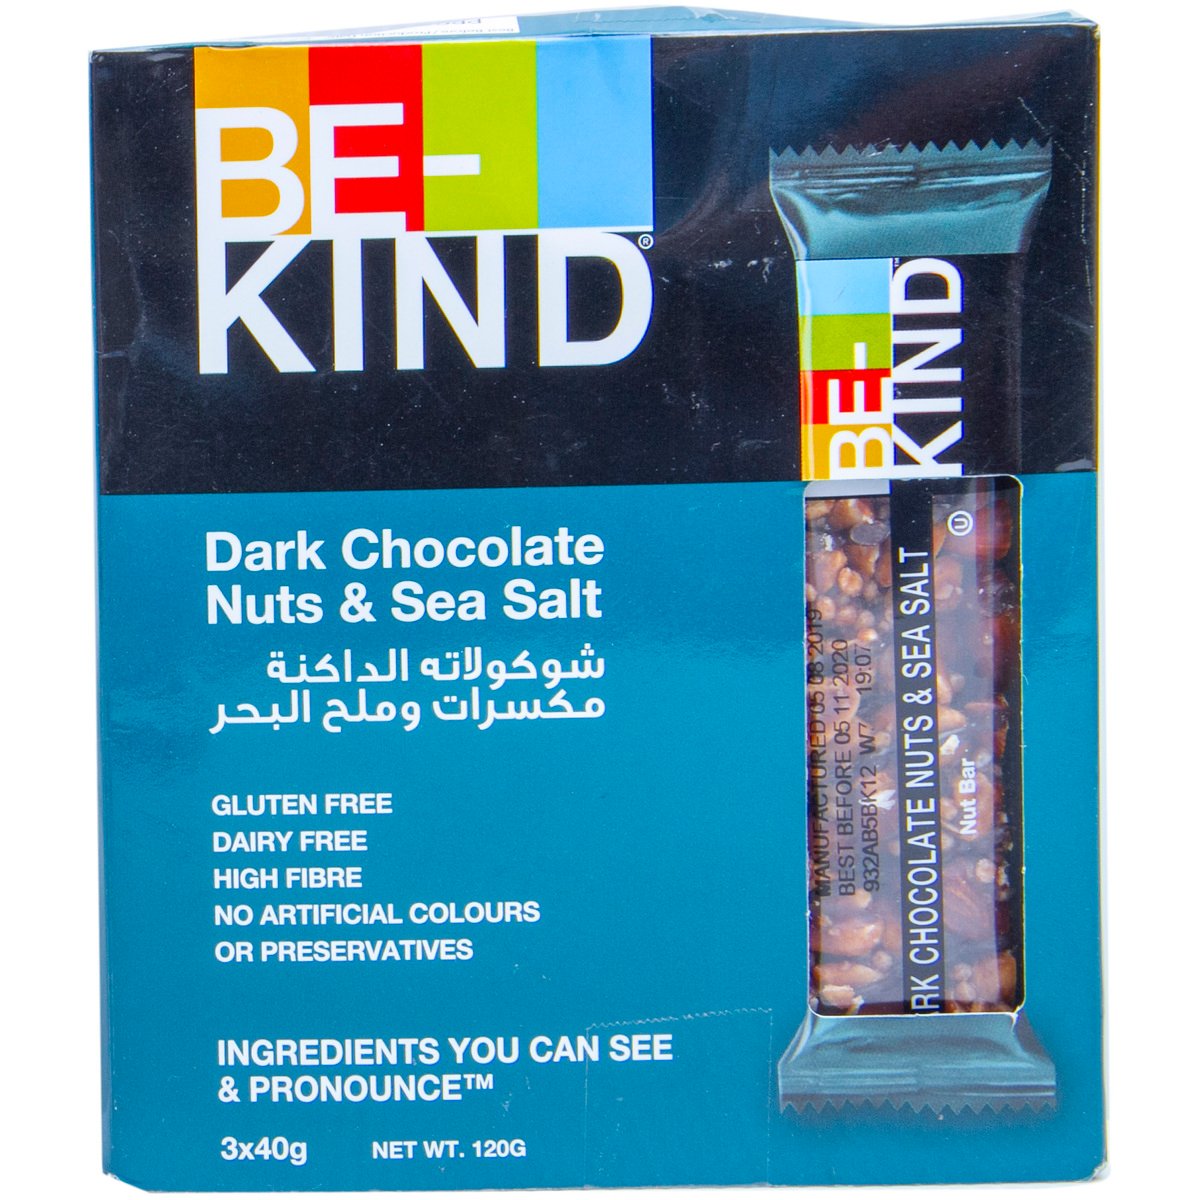 Be Kind Dark Chocolate Nuts & Sea Salt Bar 3 x 40g